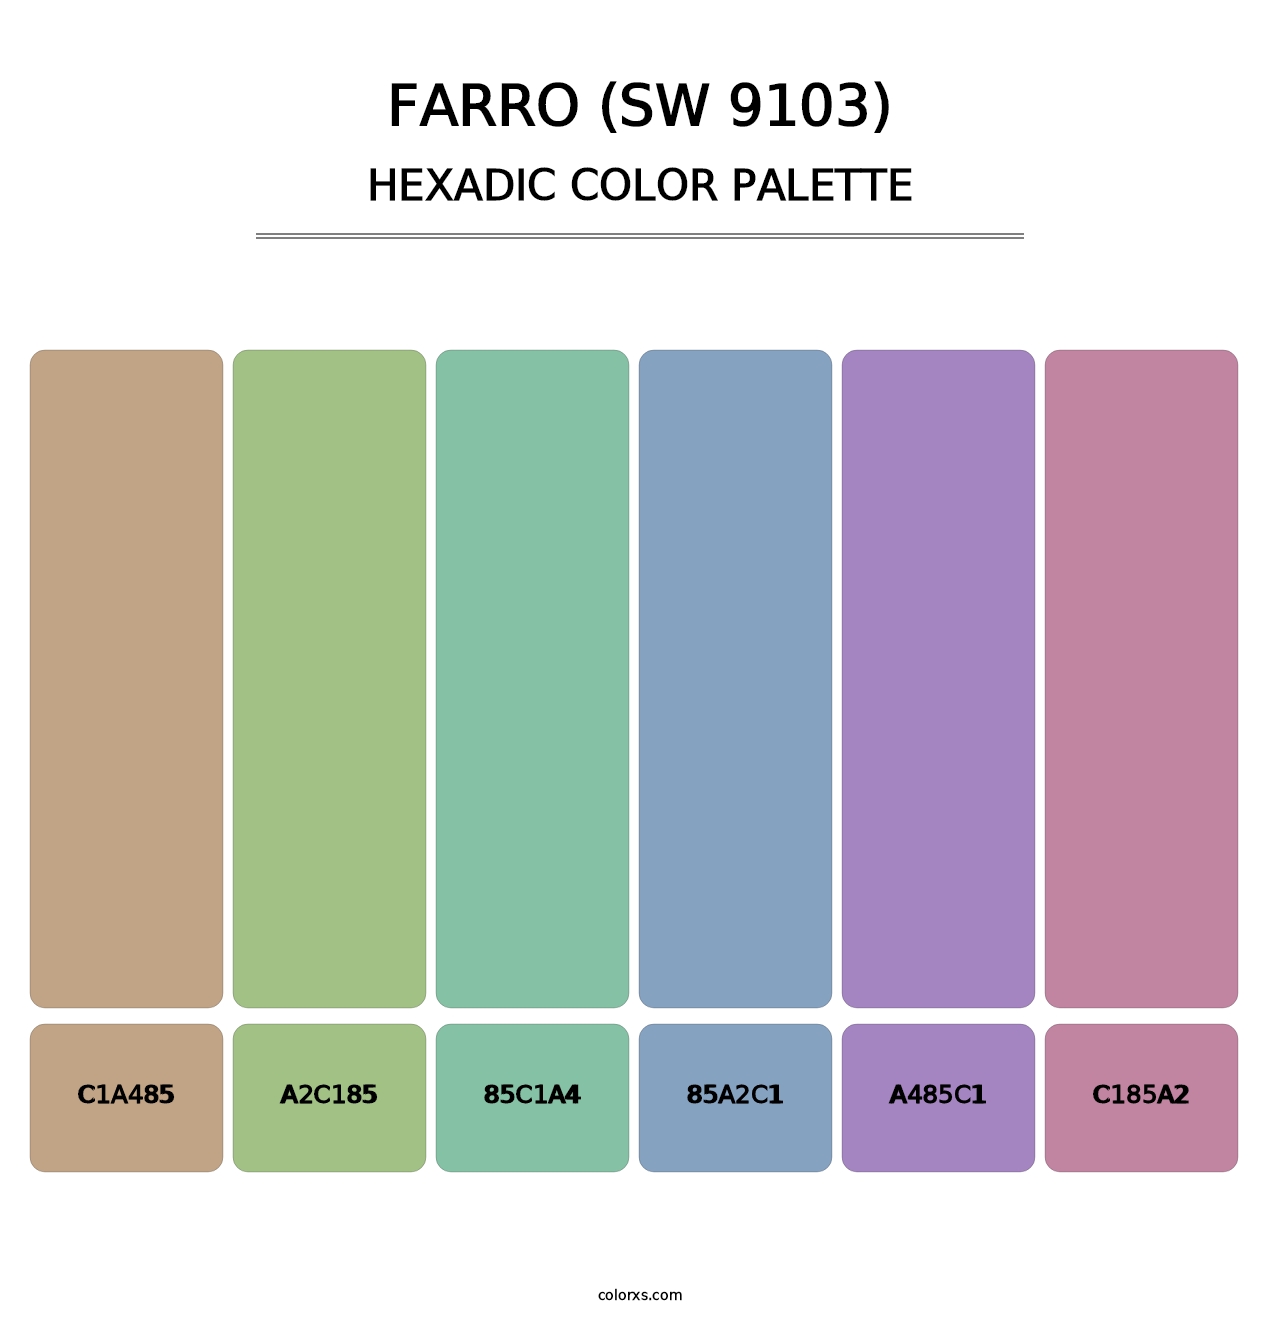 Farro (SW 9103) - Hexadic Color Palette